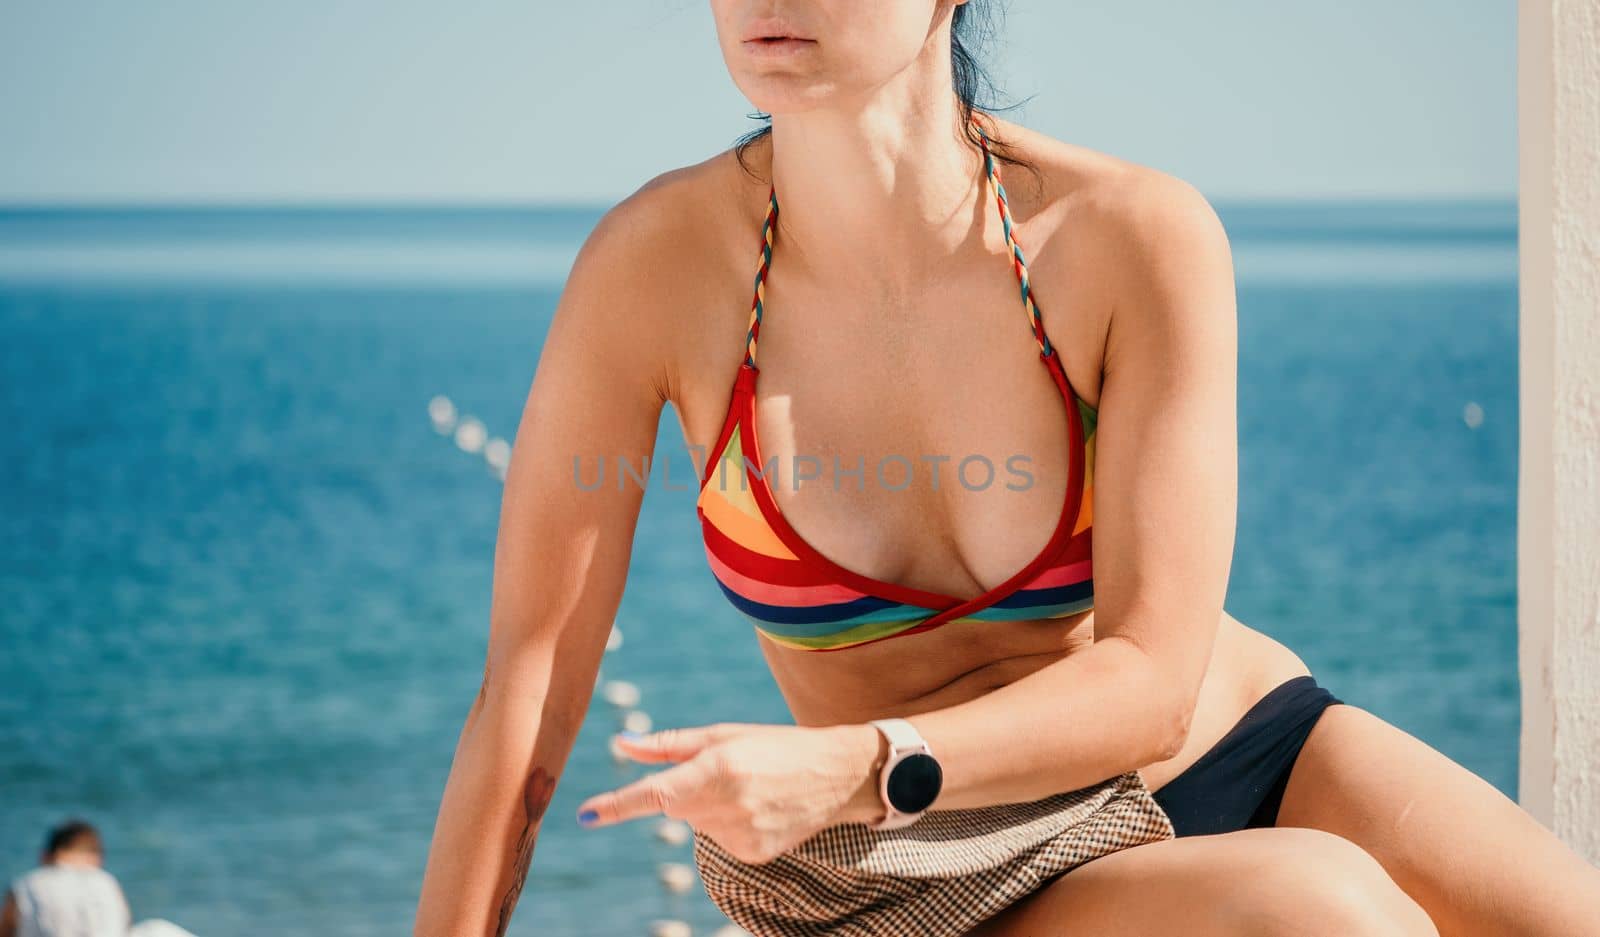 Woman in rainbow bikini. Happy tanned girl in rainbow swimsuit at seaside, blue sea water in background